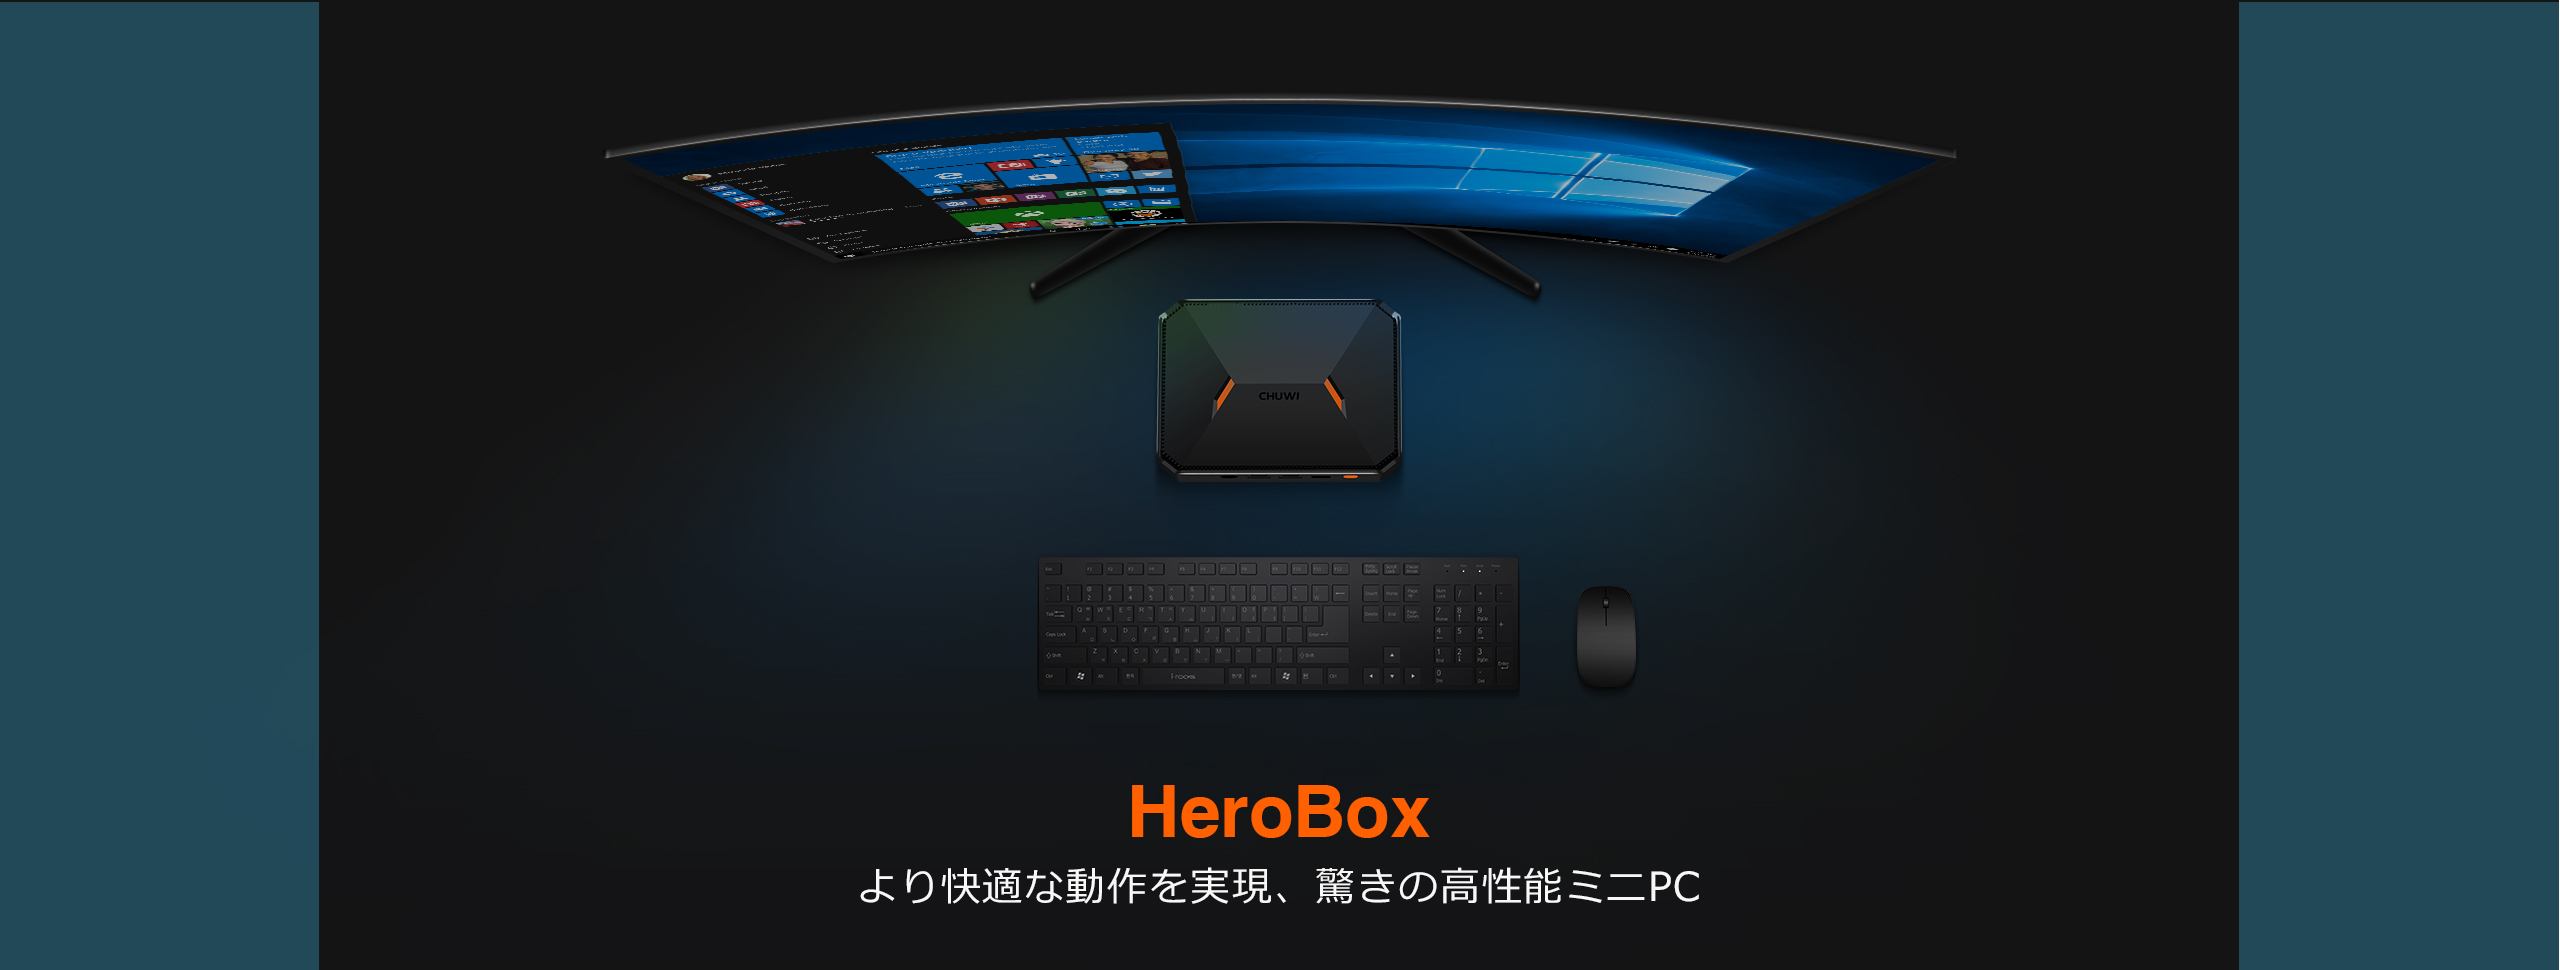 HeroBox-ミニPC-カテゴリー-Chuwi（ツーウェイ） 公式サイト